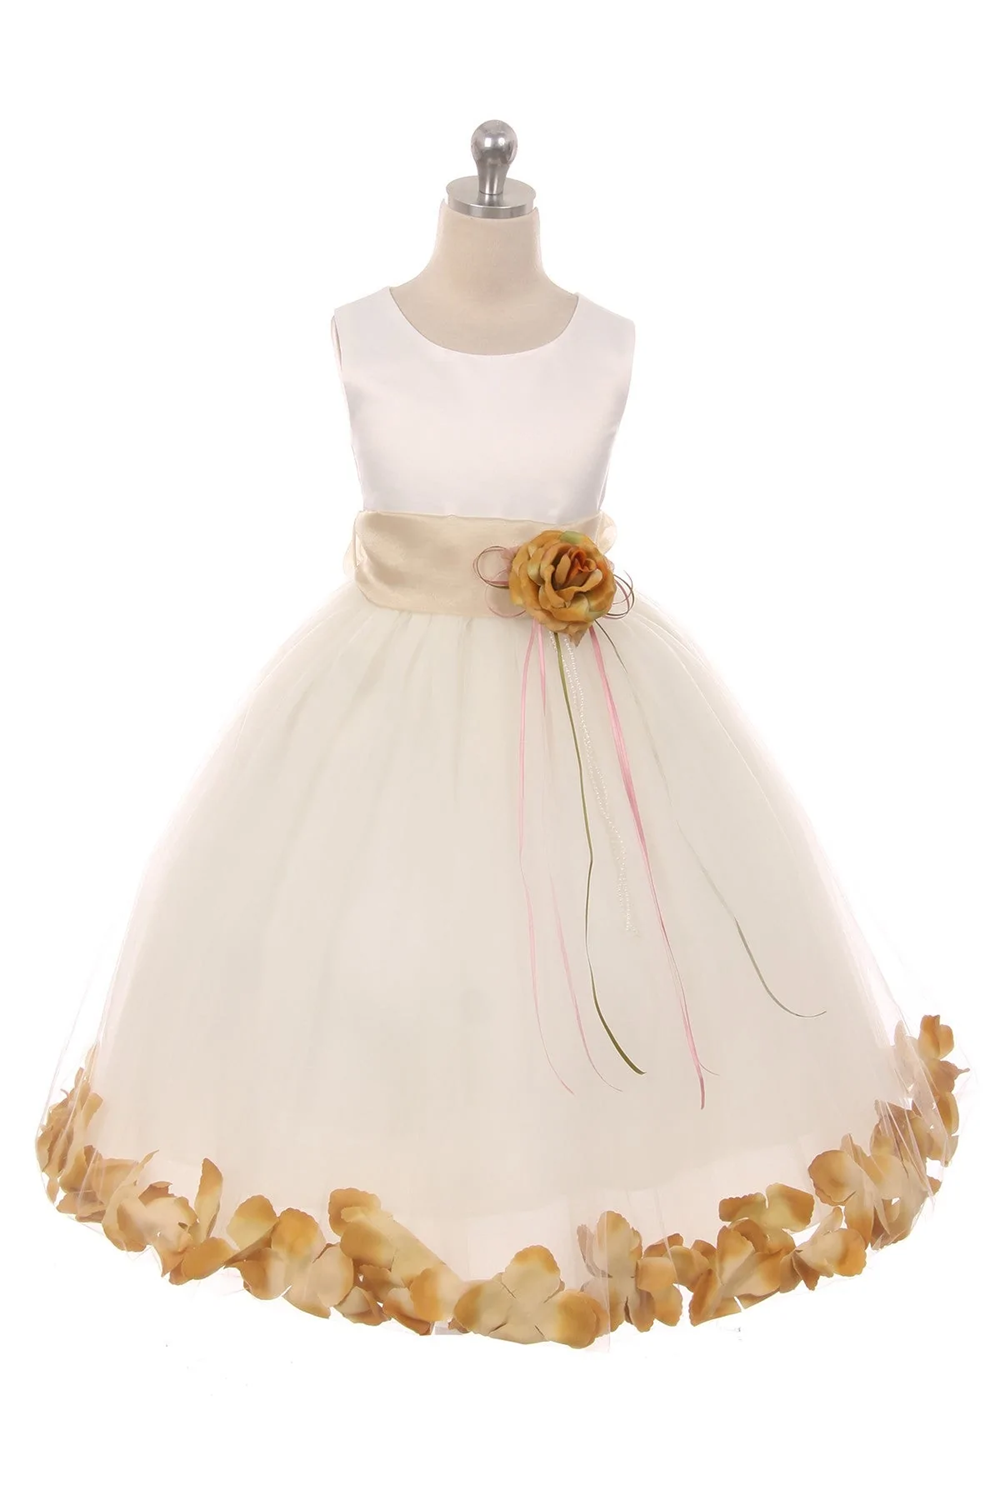 160 b satin flower petal ivory dress (1 of 2 selections)